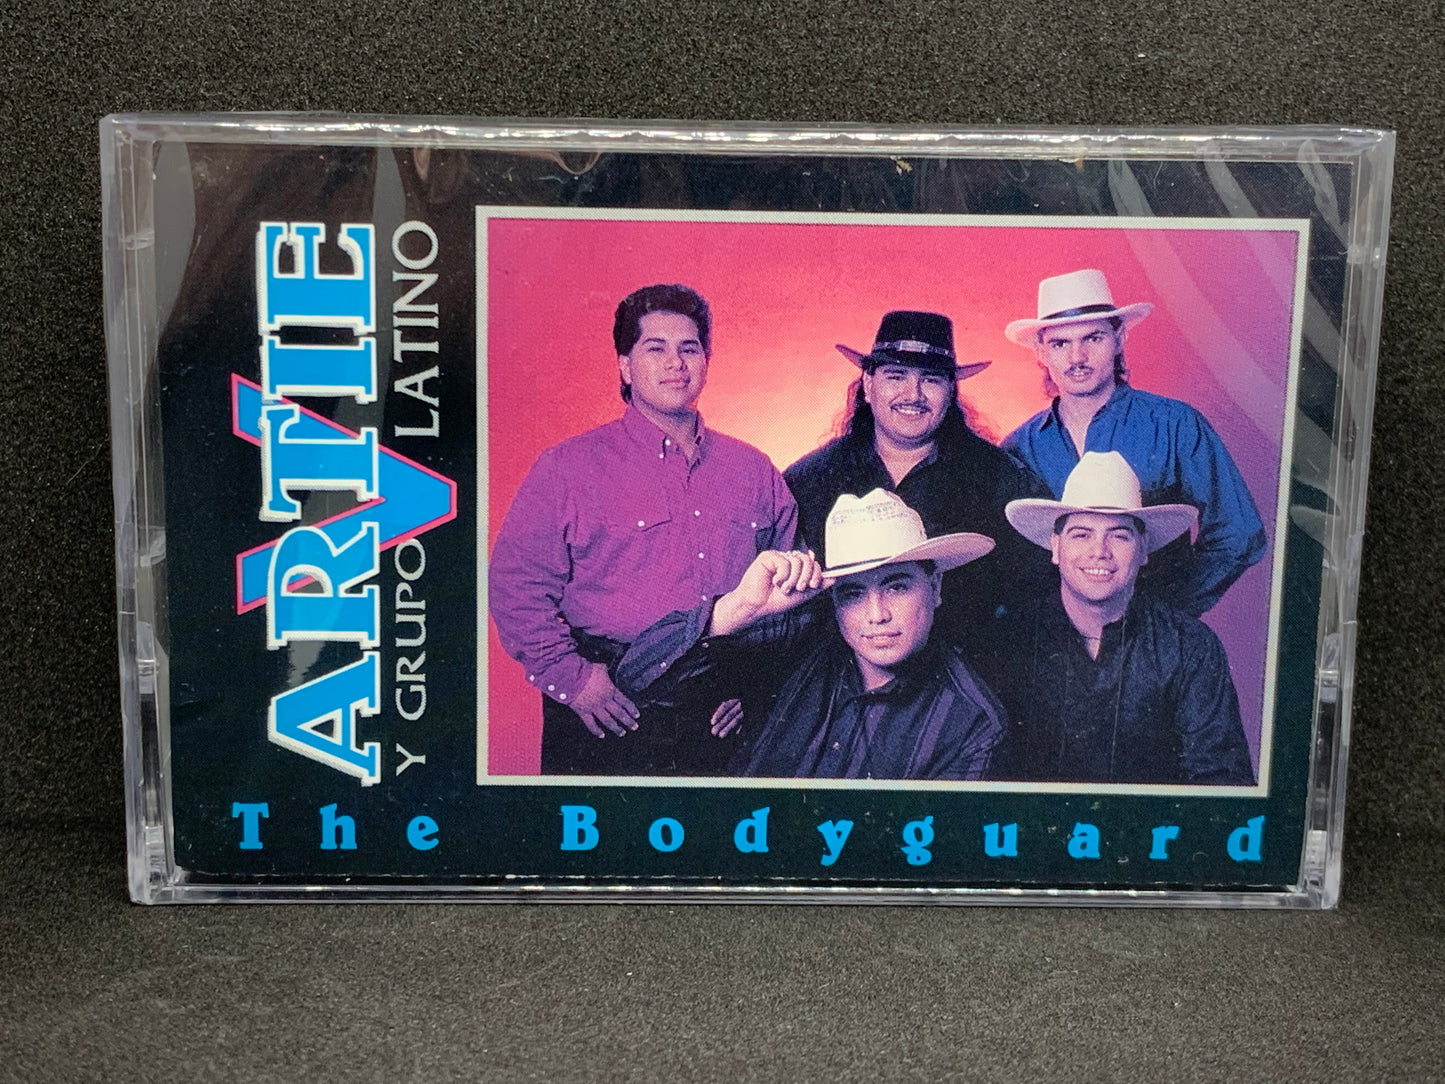 Artie Y Grupo Latino - The Bodyguard (Cassette)